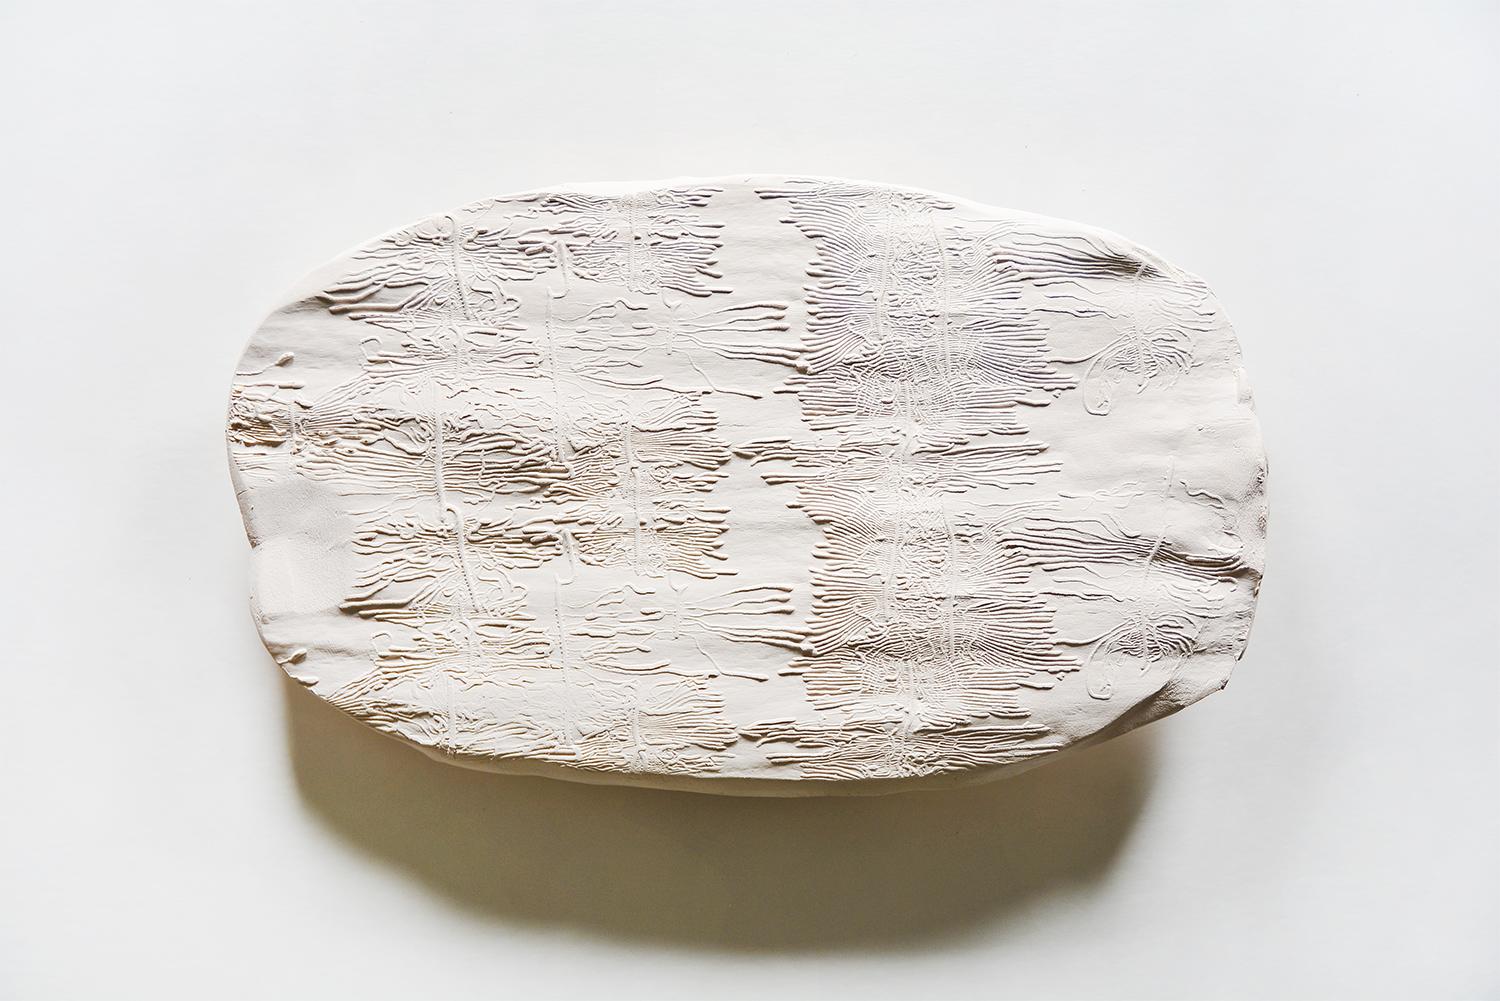 Patricia Lazcano Irazazábal Abstract Sculpture - TRAÇAS 5 Ceramic Sculpture Wood Tracks Nature White Neutral Decoration Art 